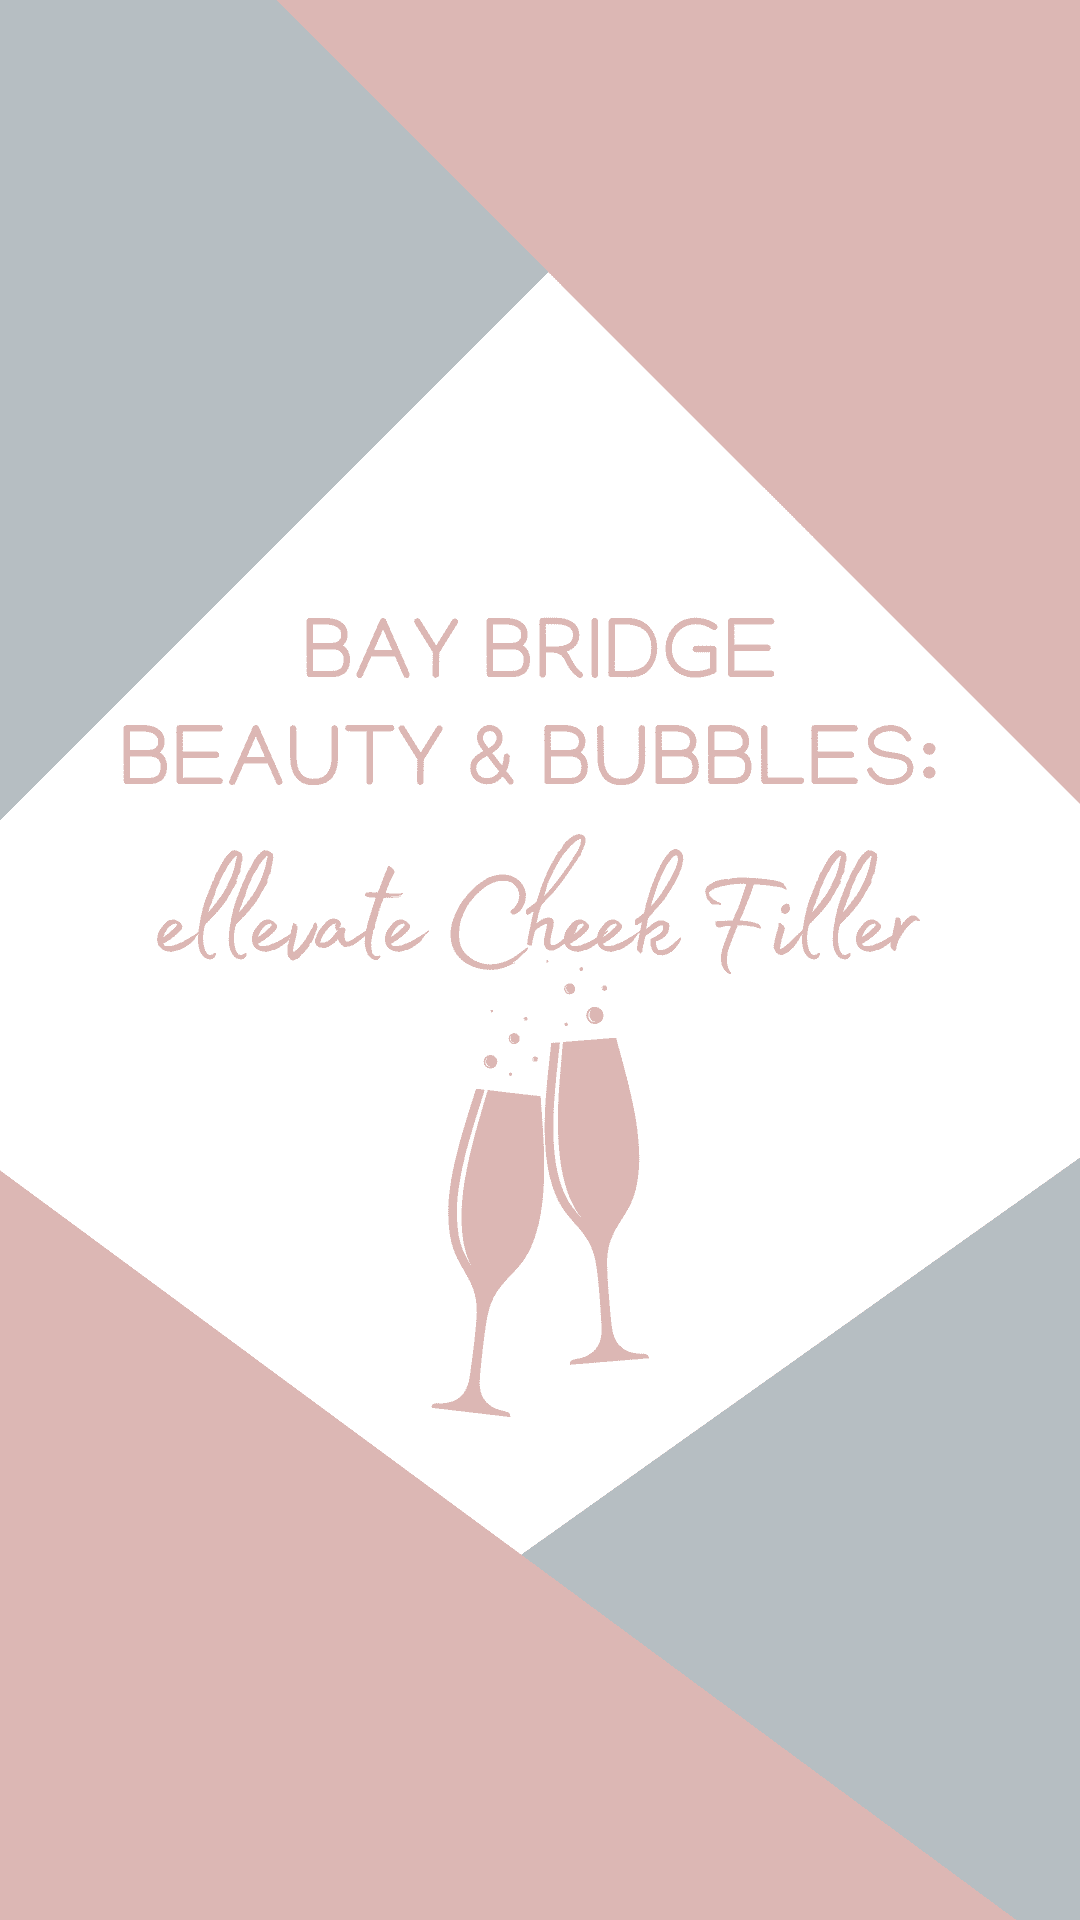 Bay Bridge Beauty & Bubbles Image